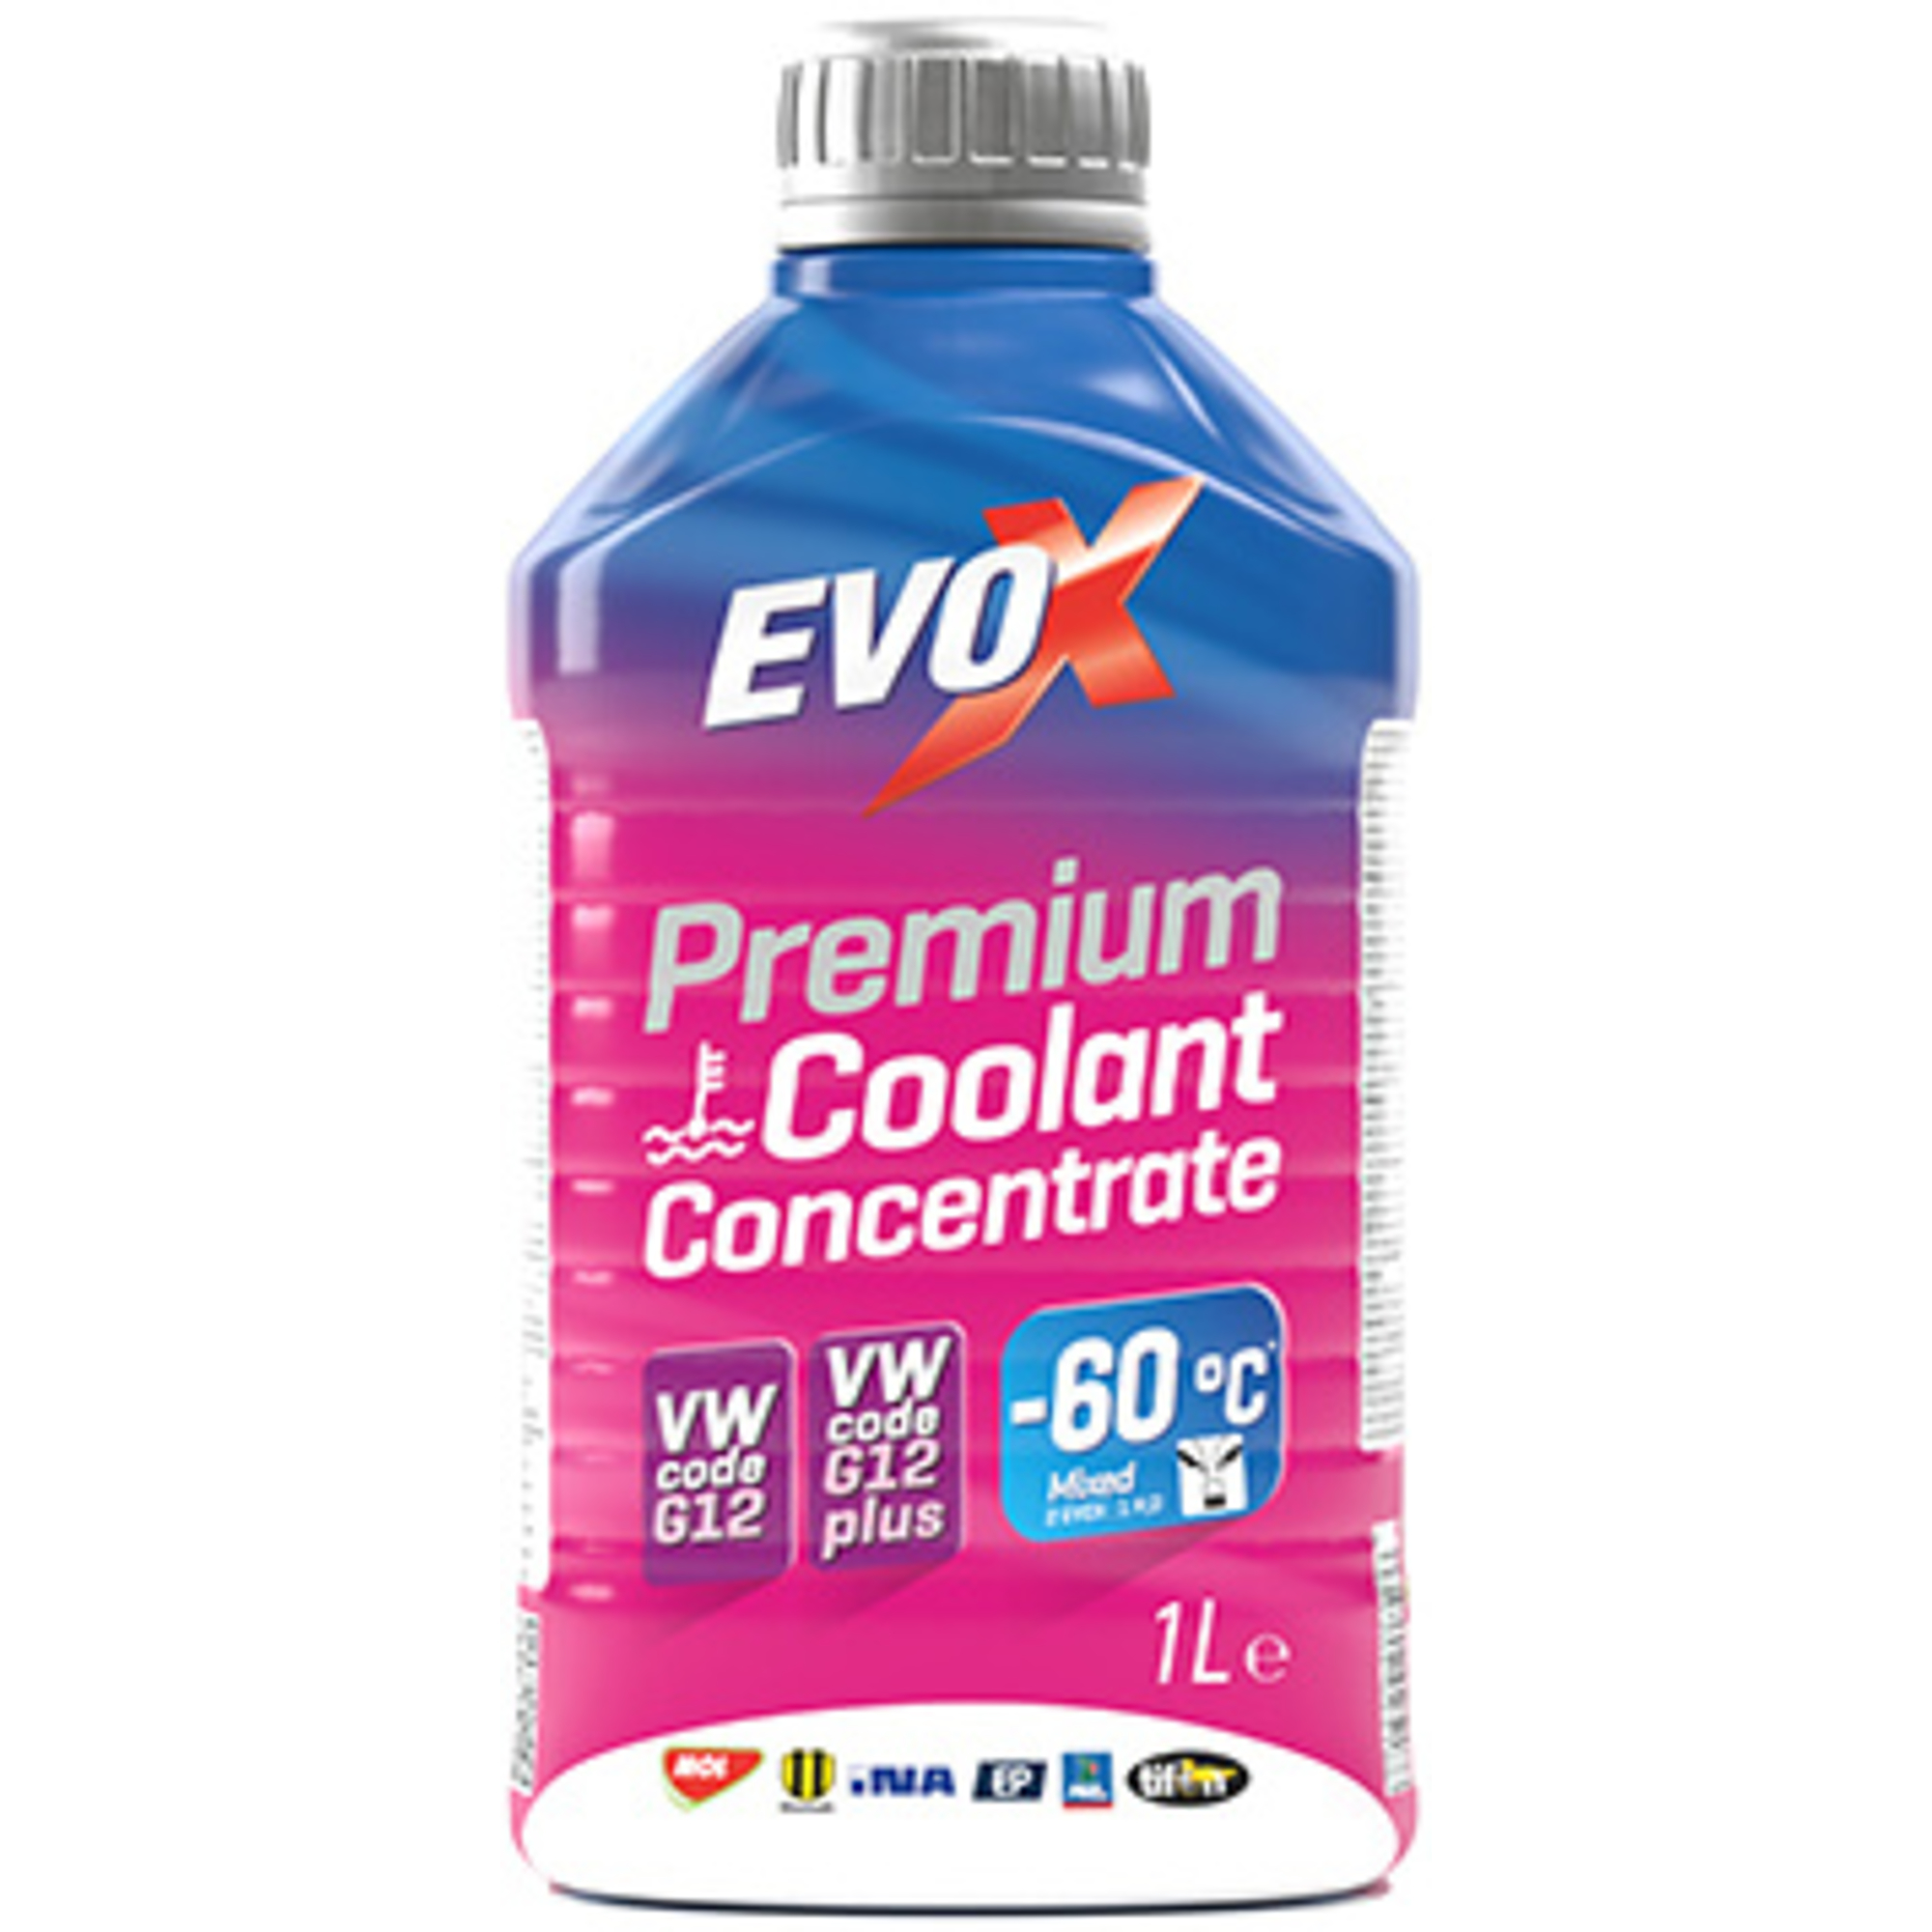 EVOX Premium concentrate 10L 19002765